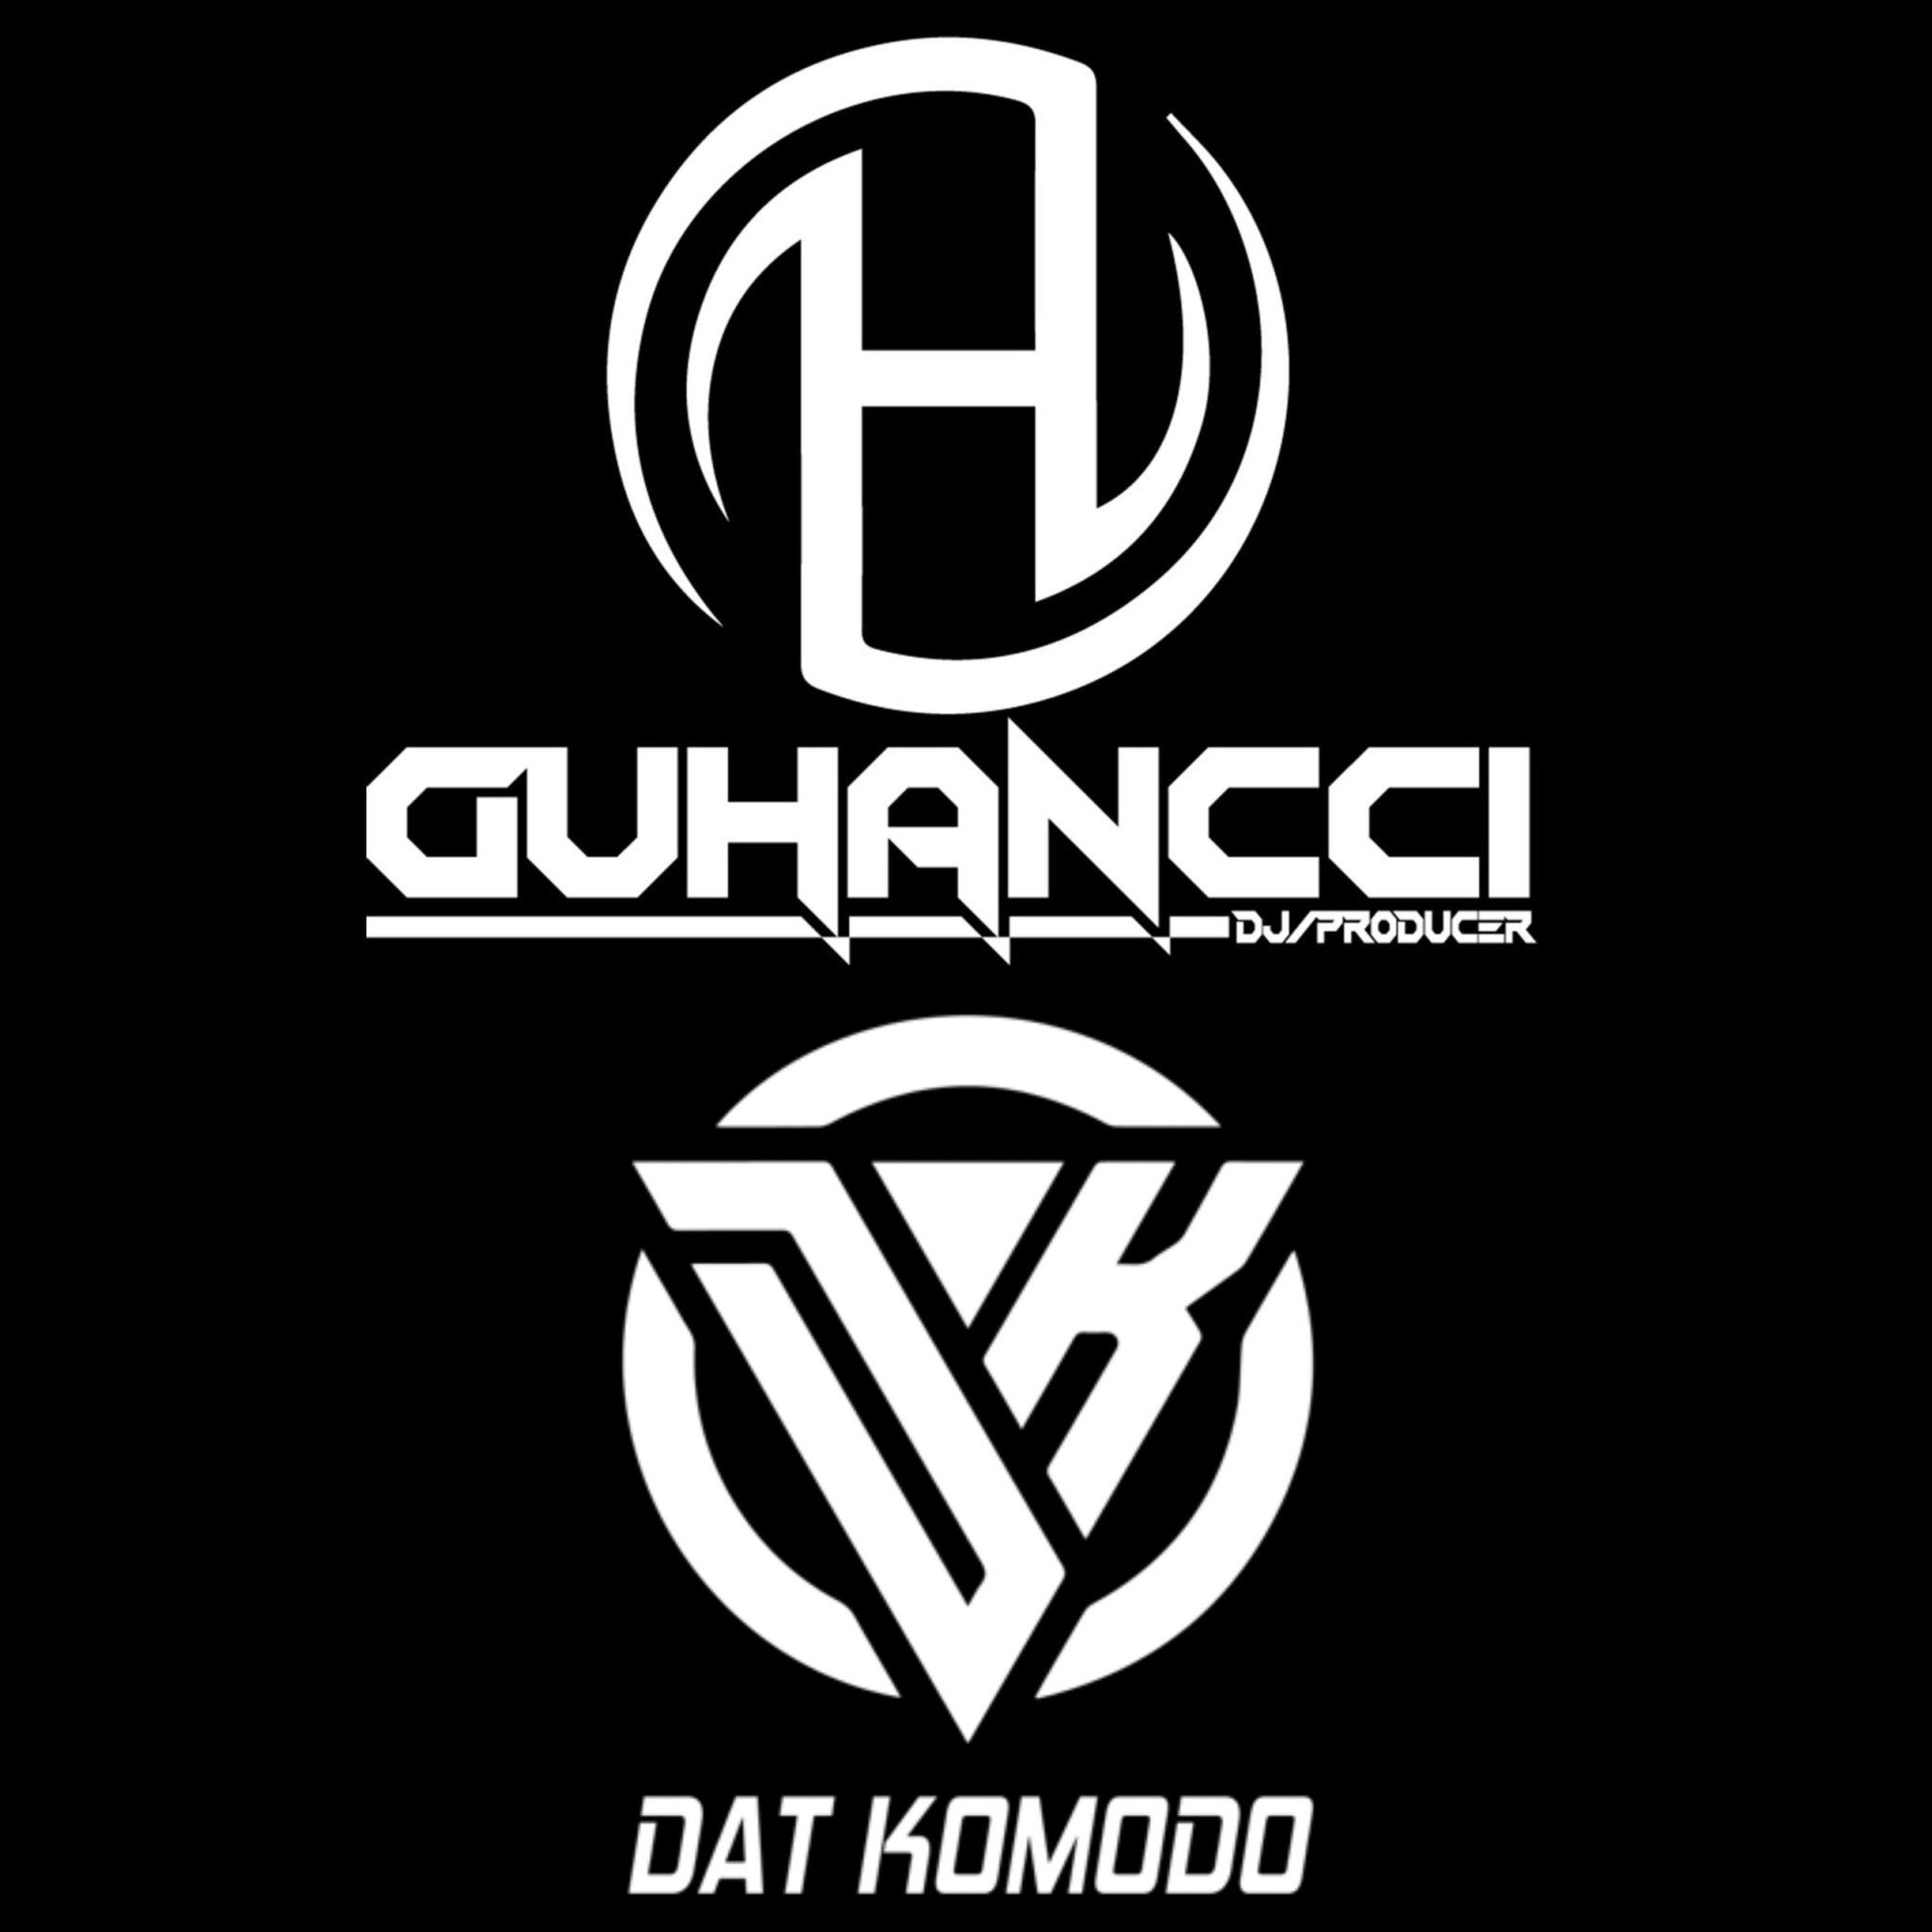 Hent Express Music - DatKomodo ft guHancci (guHancci Team)